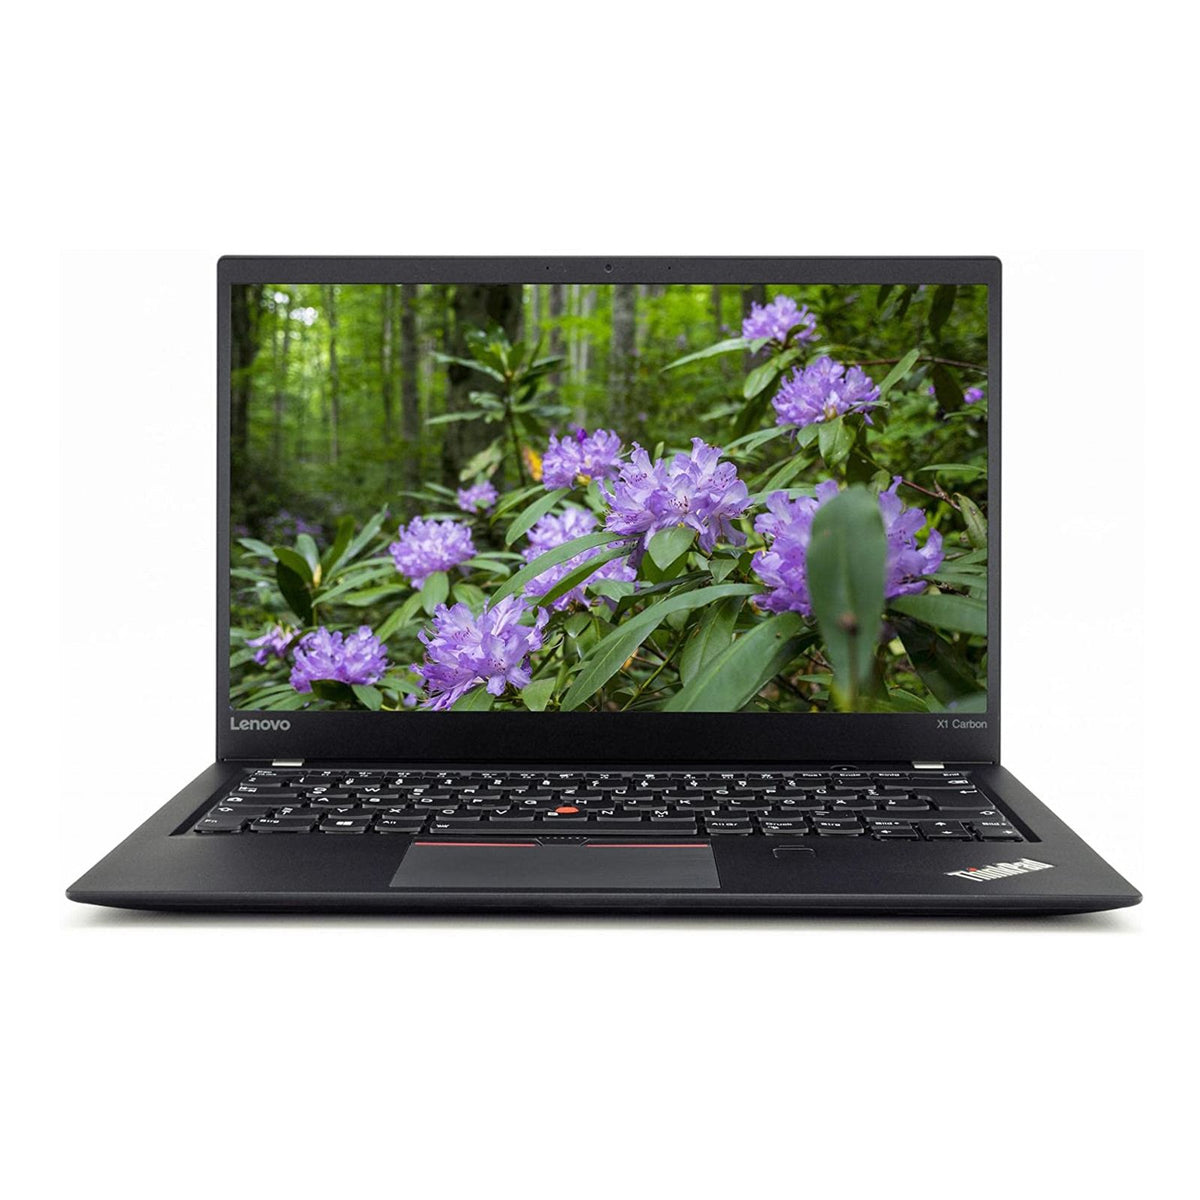 Lenovo ThinkPad X1 Carbon 5th Gen Laptop Intel i7 6th Gen 8GB 